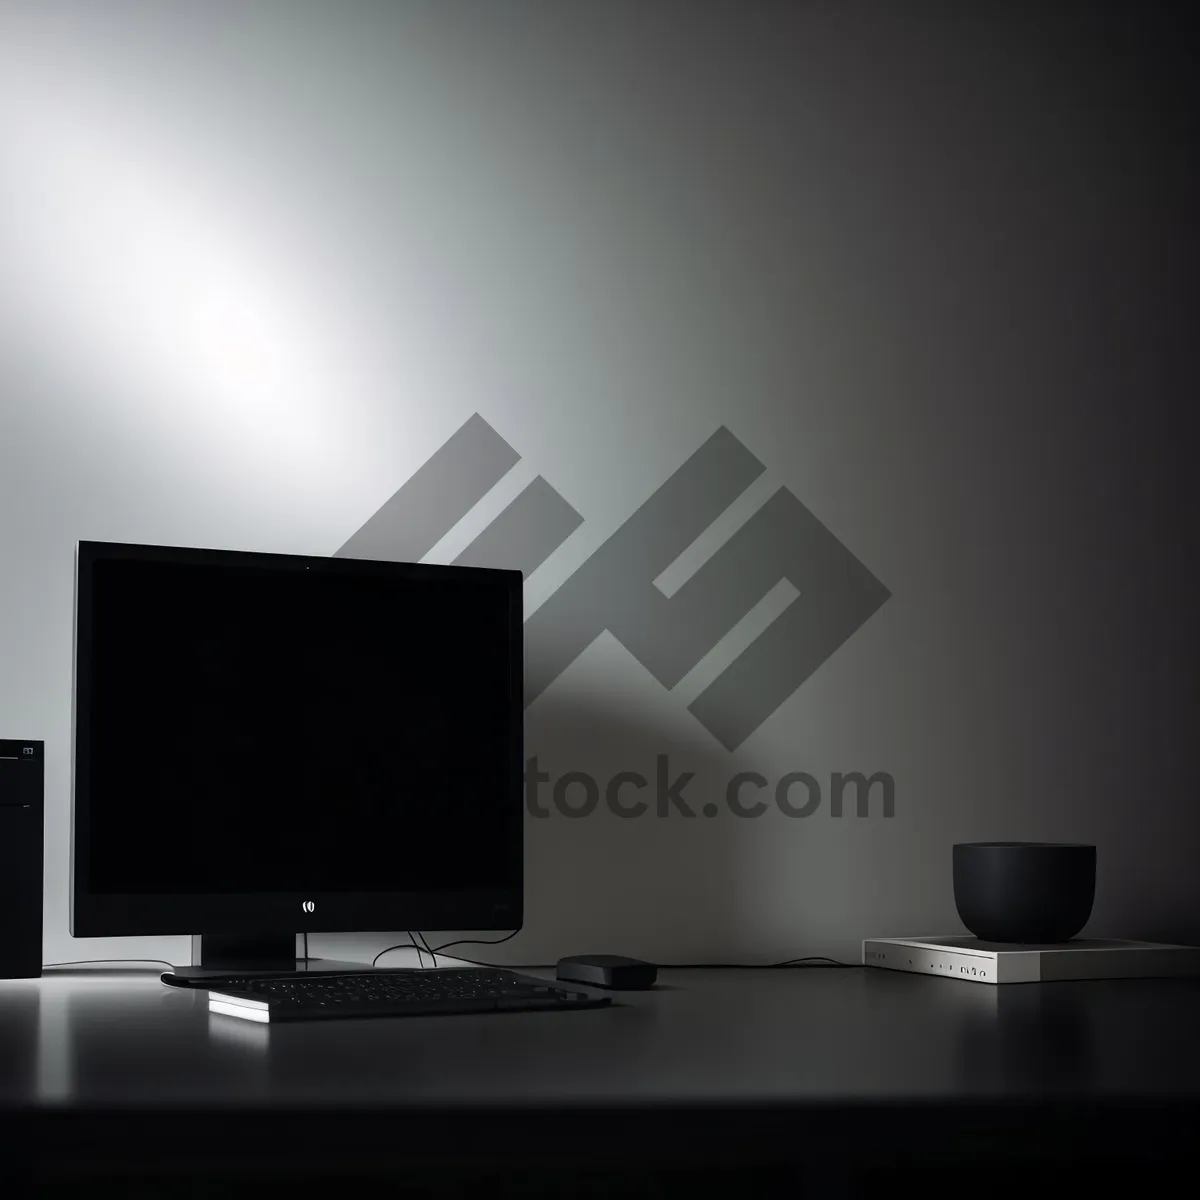 Picture of Sleek Desk Setup: Modern Monitor and Keyboard